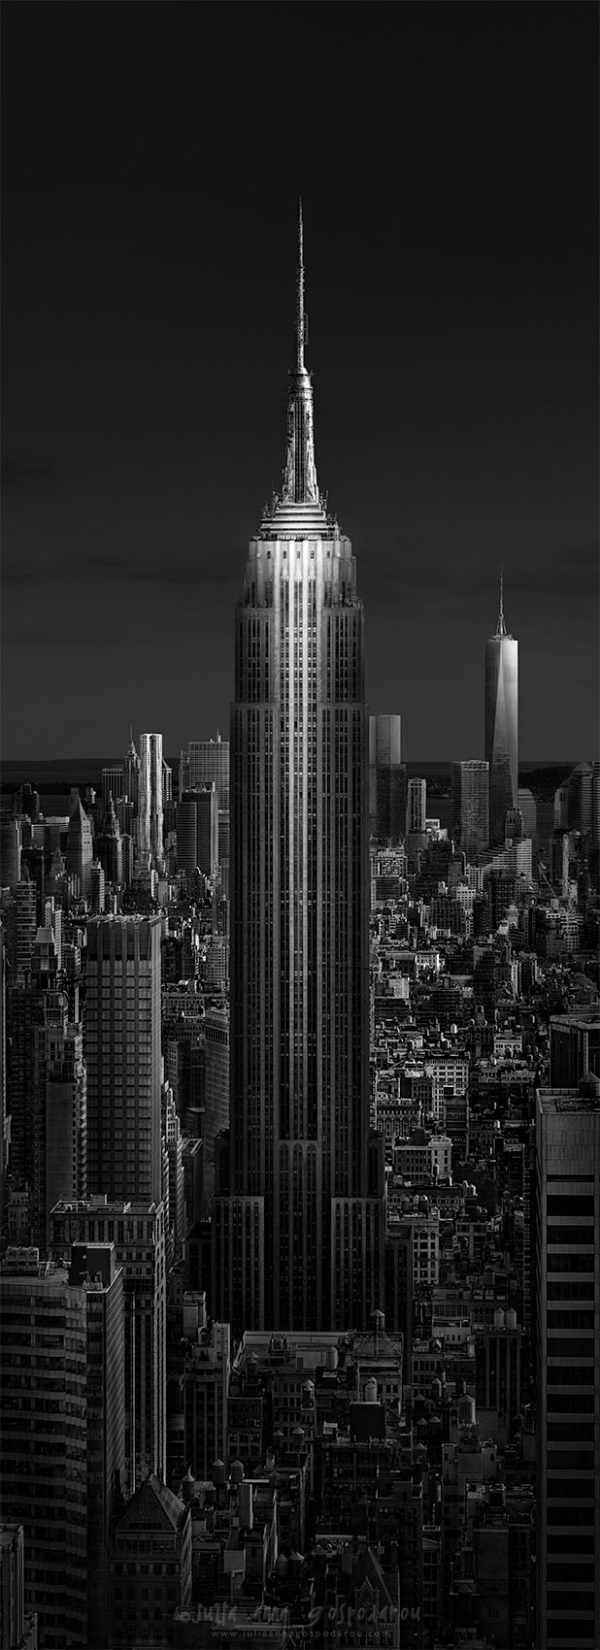 <center><p style="color:#FFFFFF;">Urban Saga II - Empire State of Light  © Julia Anna Gospodarou - Empire State Building New York</p></center>